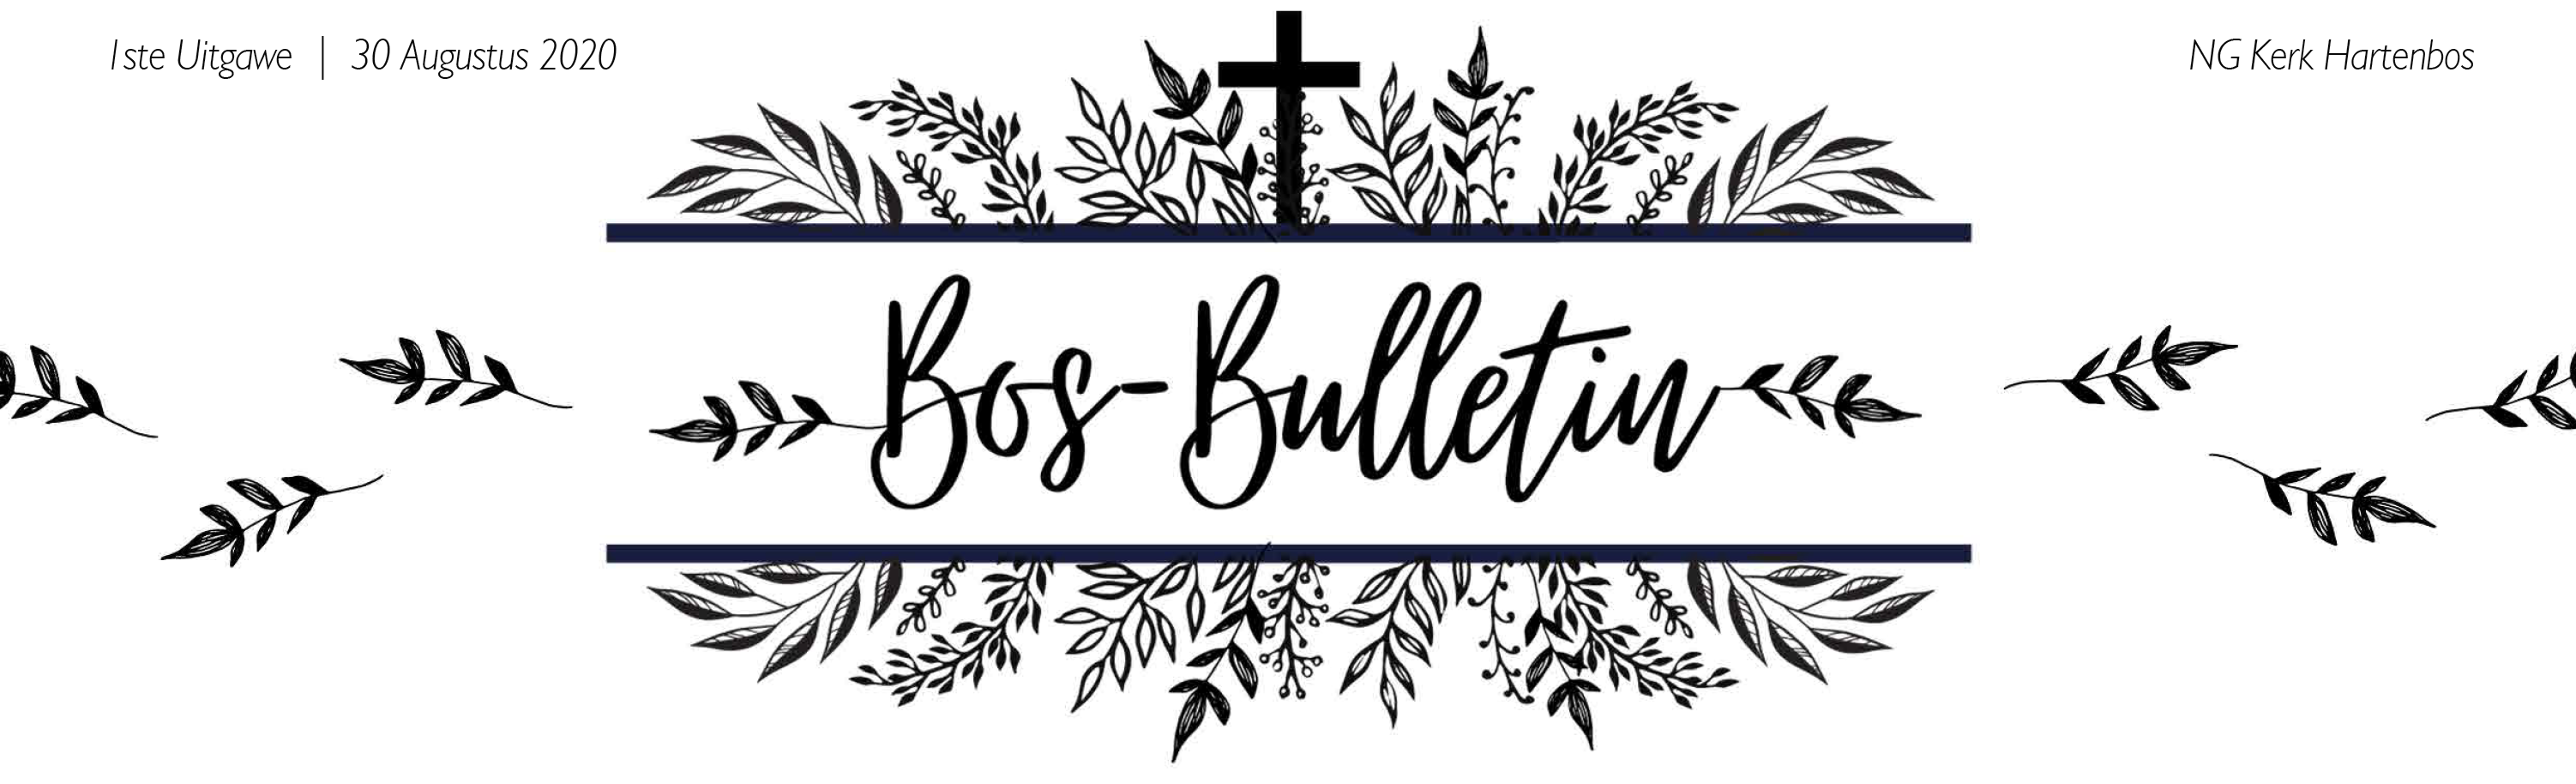 Bos Bulletin